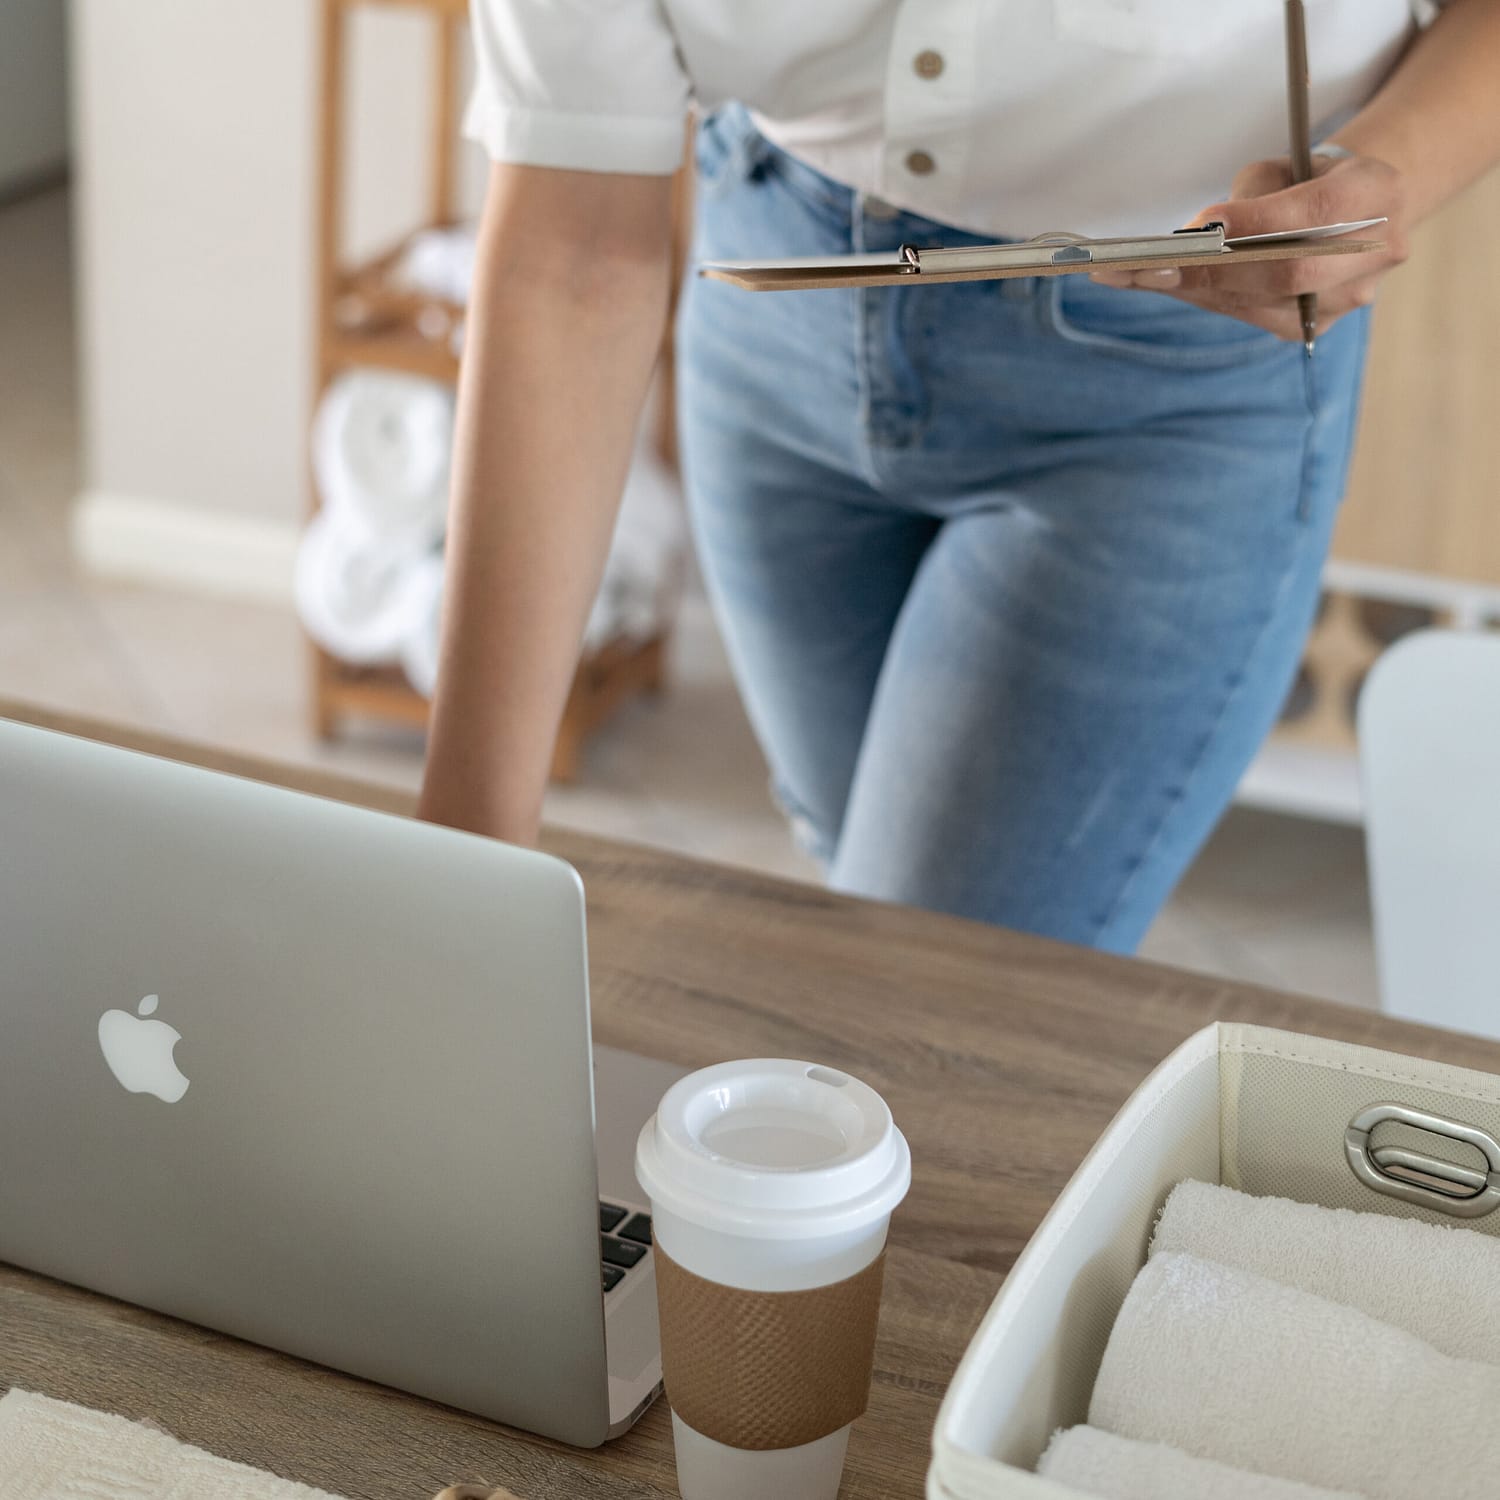 open laptop on desk with lady in jeans using keyboard